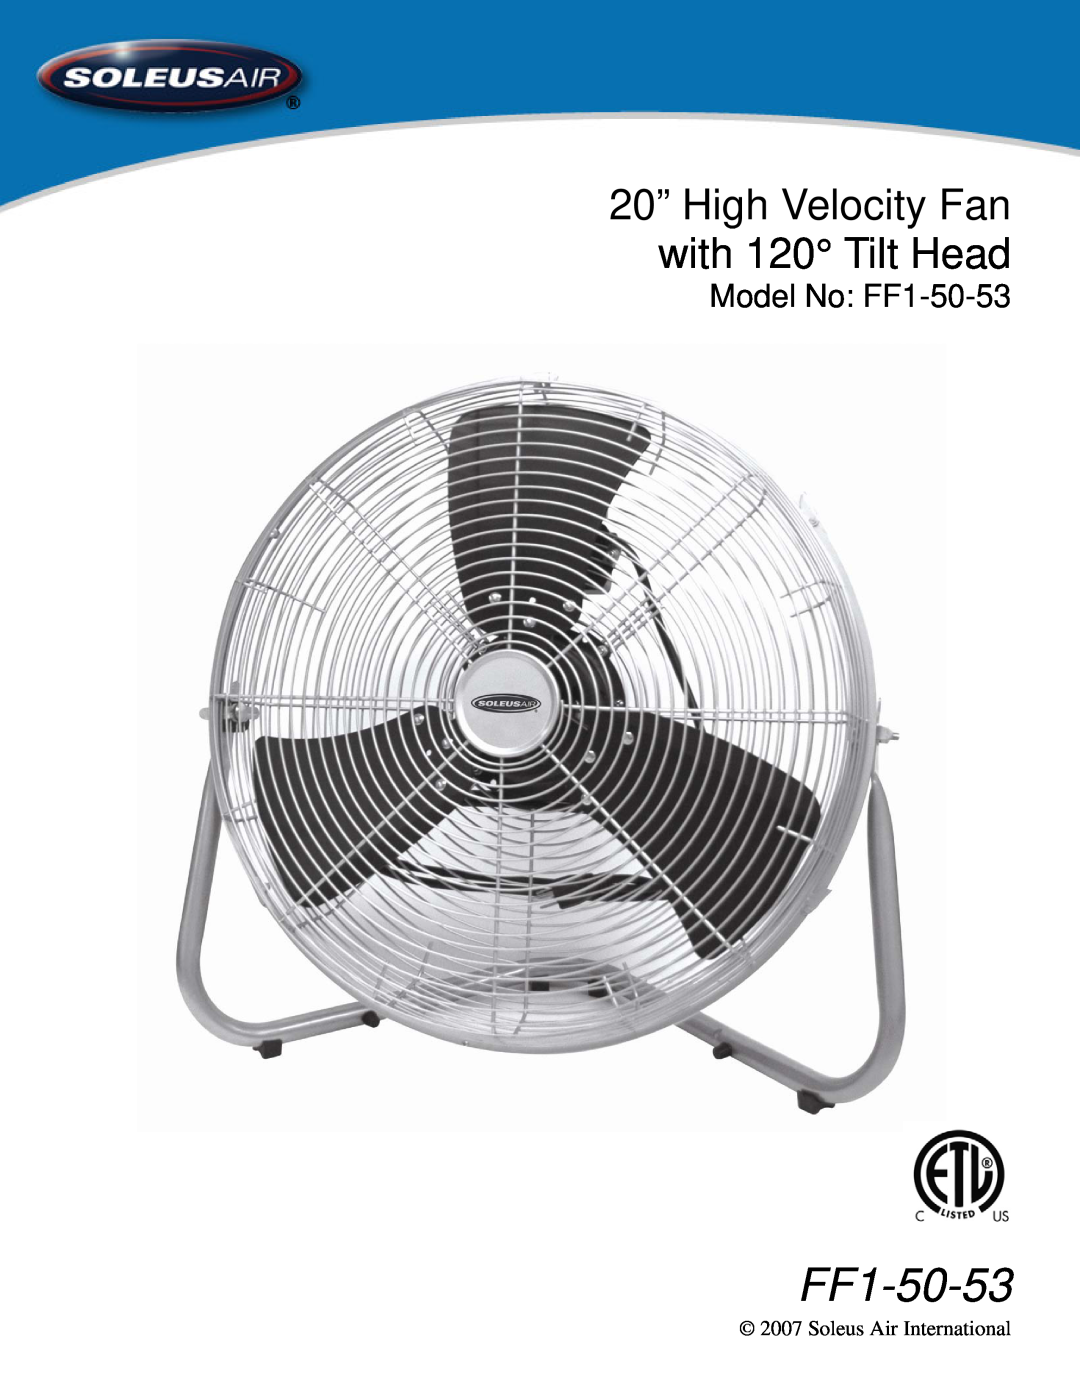 Soleus Air manual 20” High Velocity Fan with 120 Tilt Head, Model No FF1-50-53, 308195 